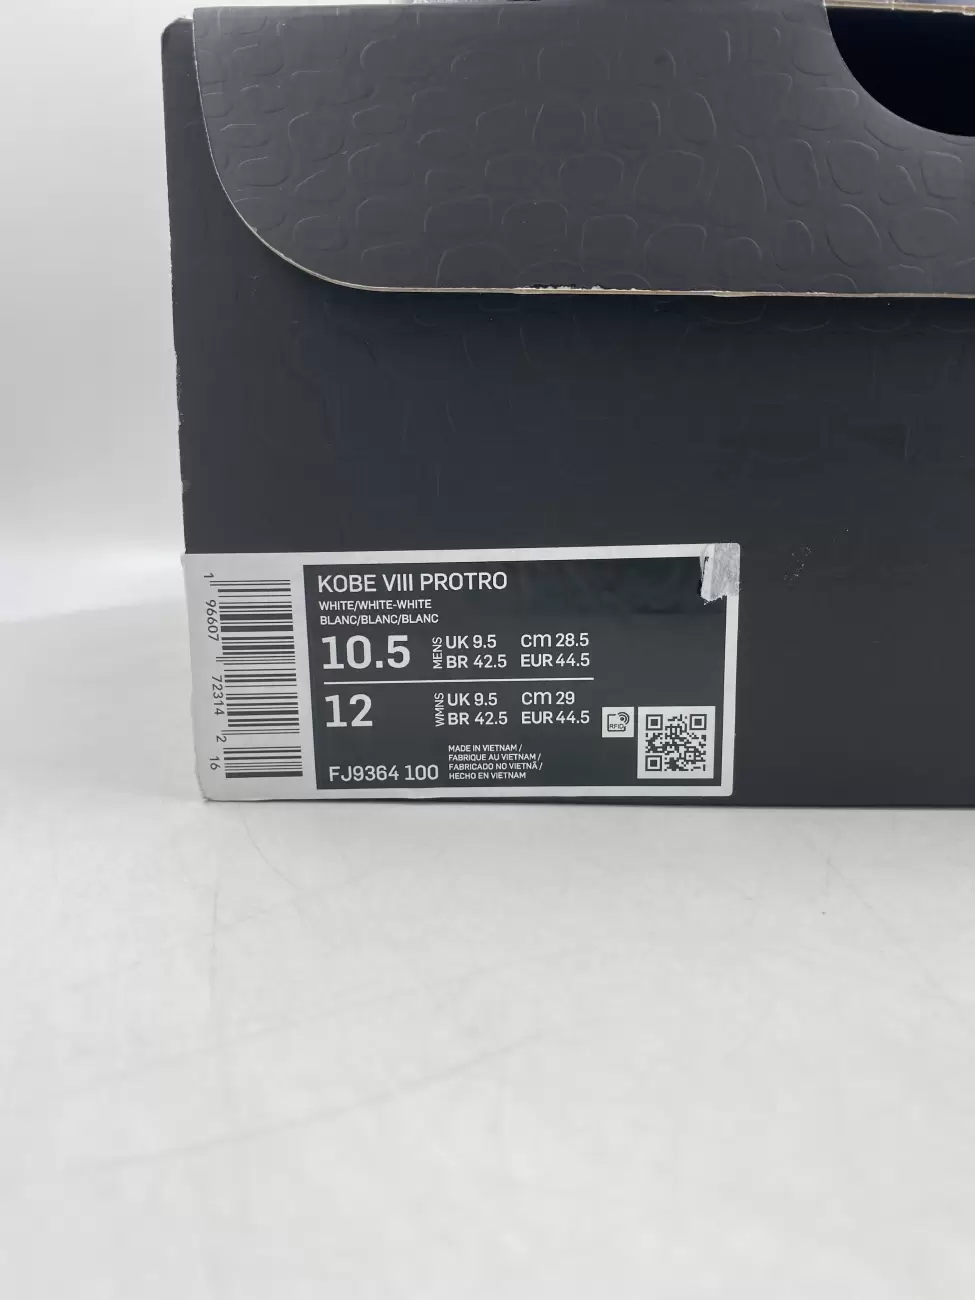 38436 - Nike Kobe 8 Protro Halo | Item Details - AfterMarket